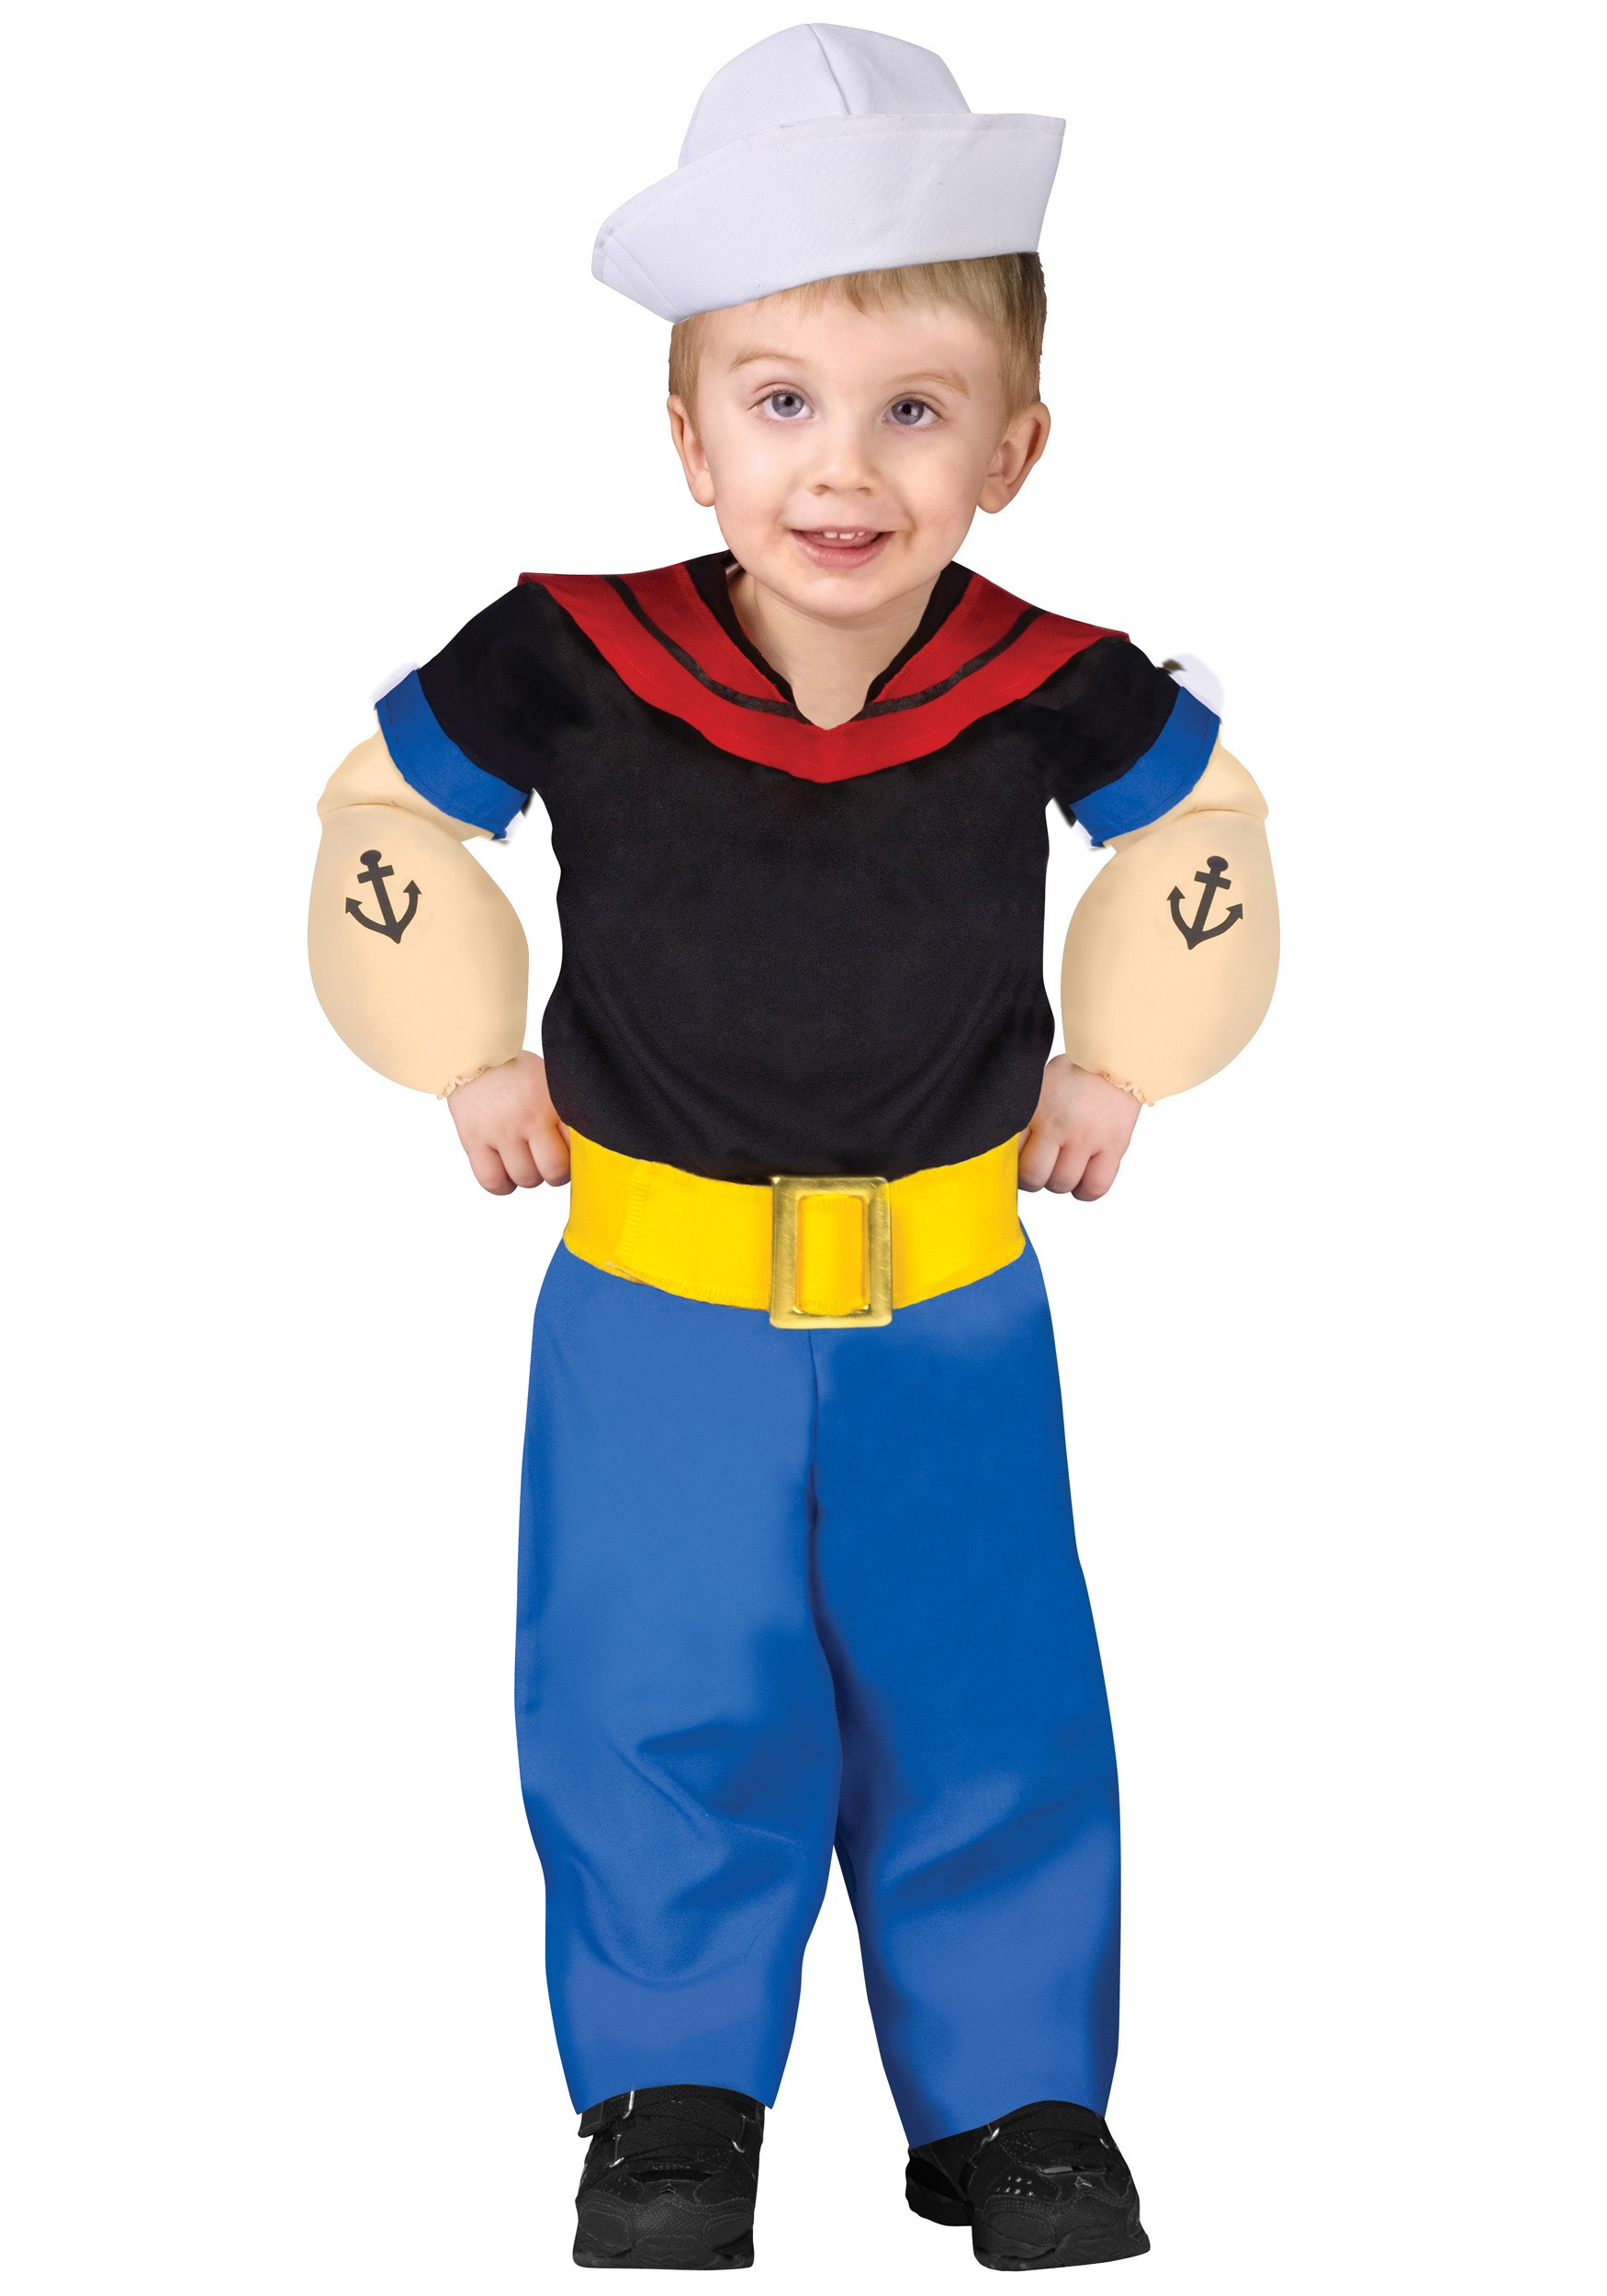 DIY Halloween Costumes For Toddler Boys
 Toddler Popeye Costume